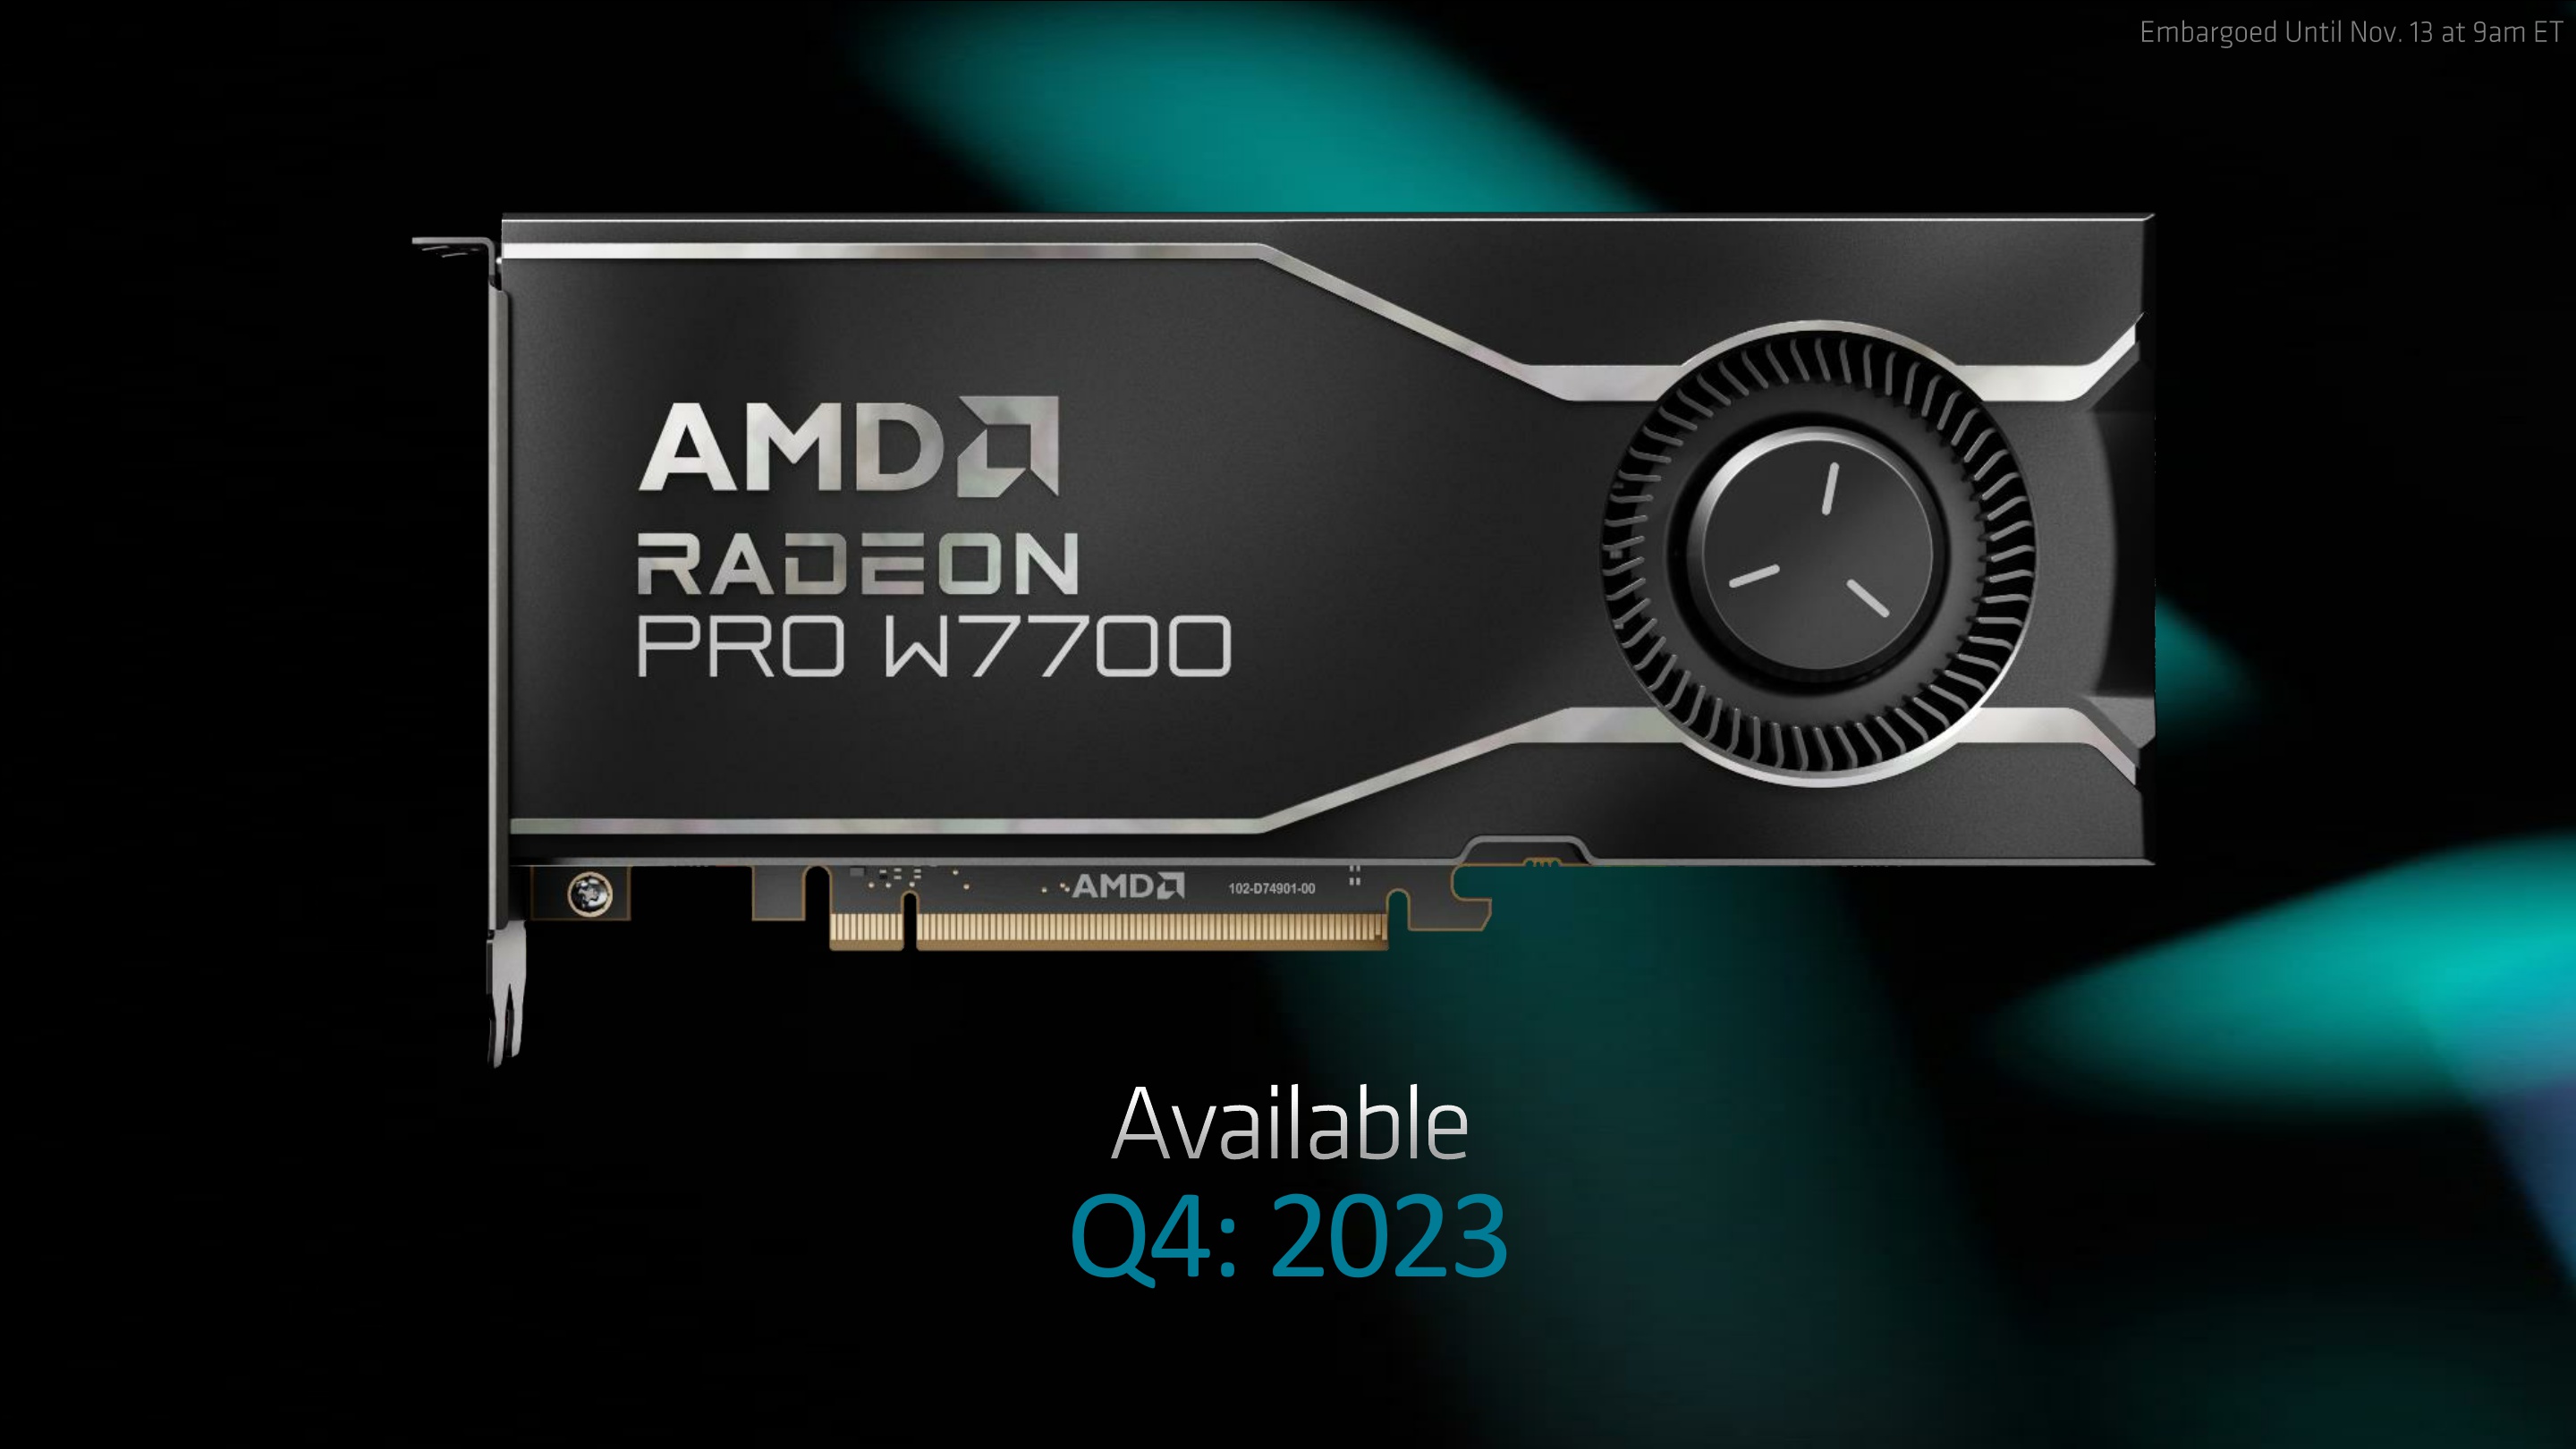 AMD Radeon PRO W7700 Press Deck - LEGAL-BRAND APPROVED_FINAL_37.jpg